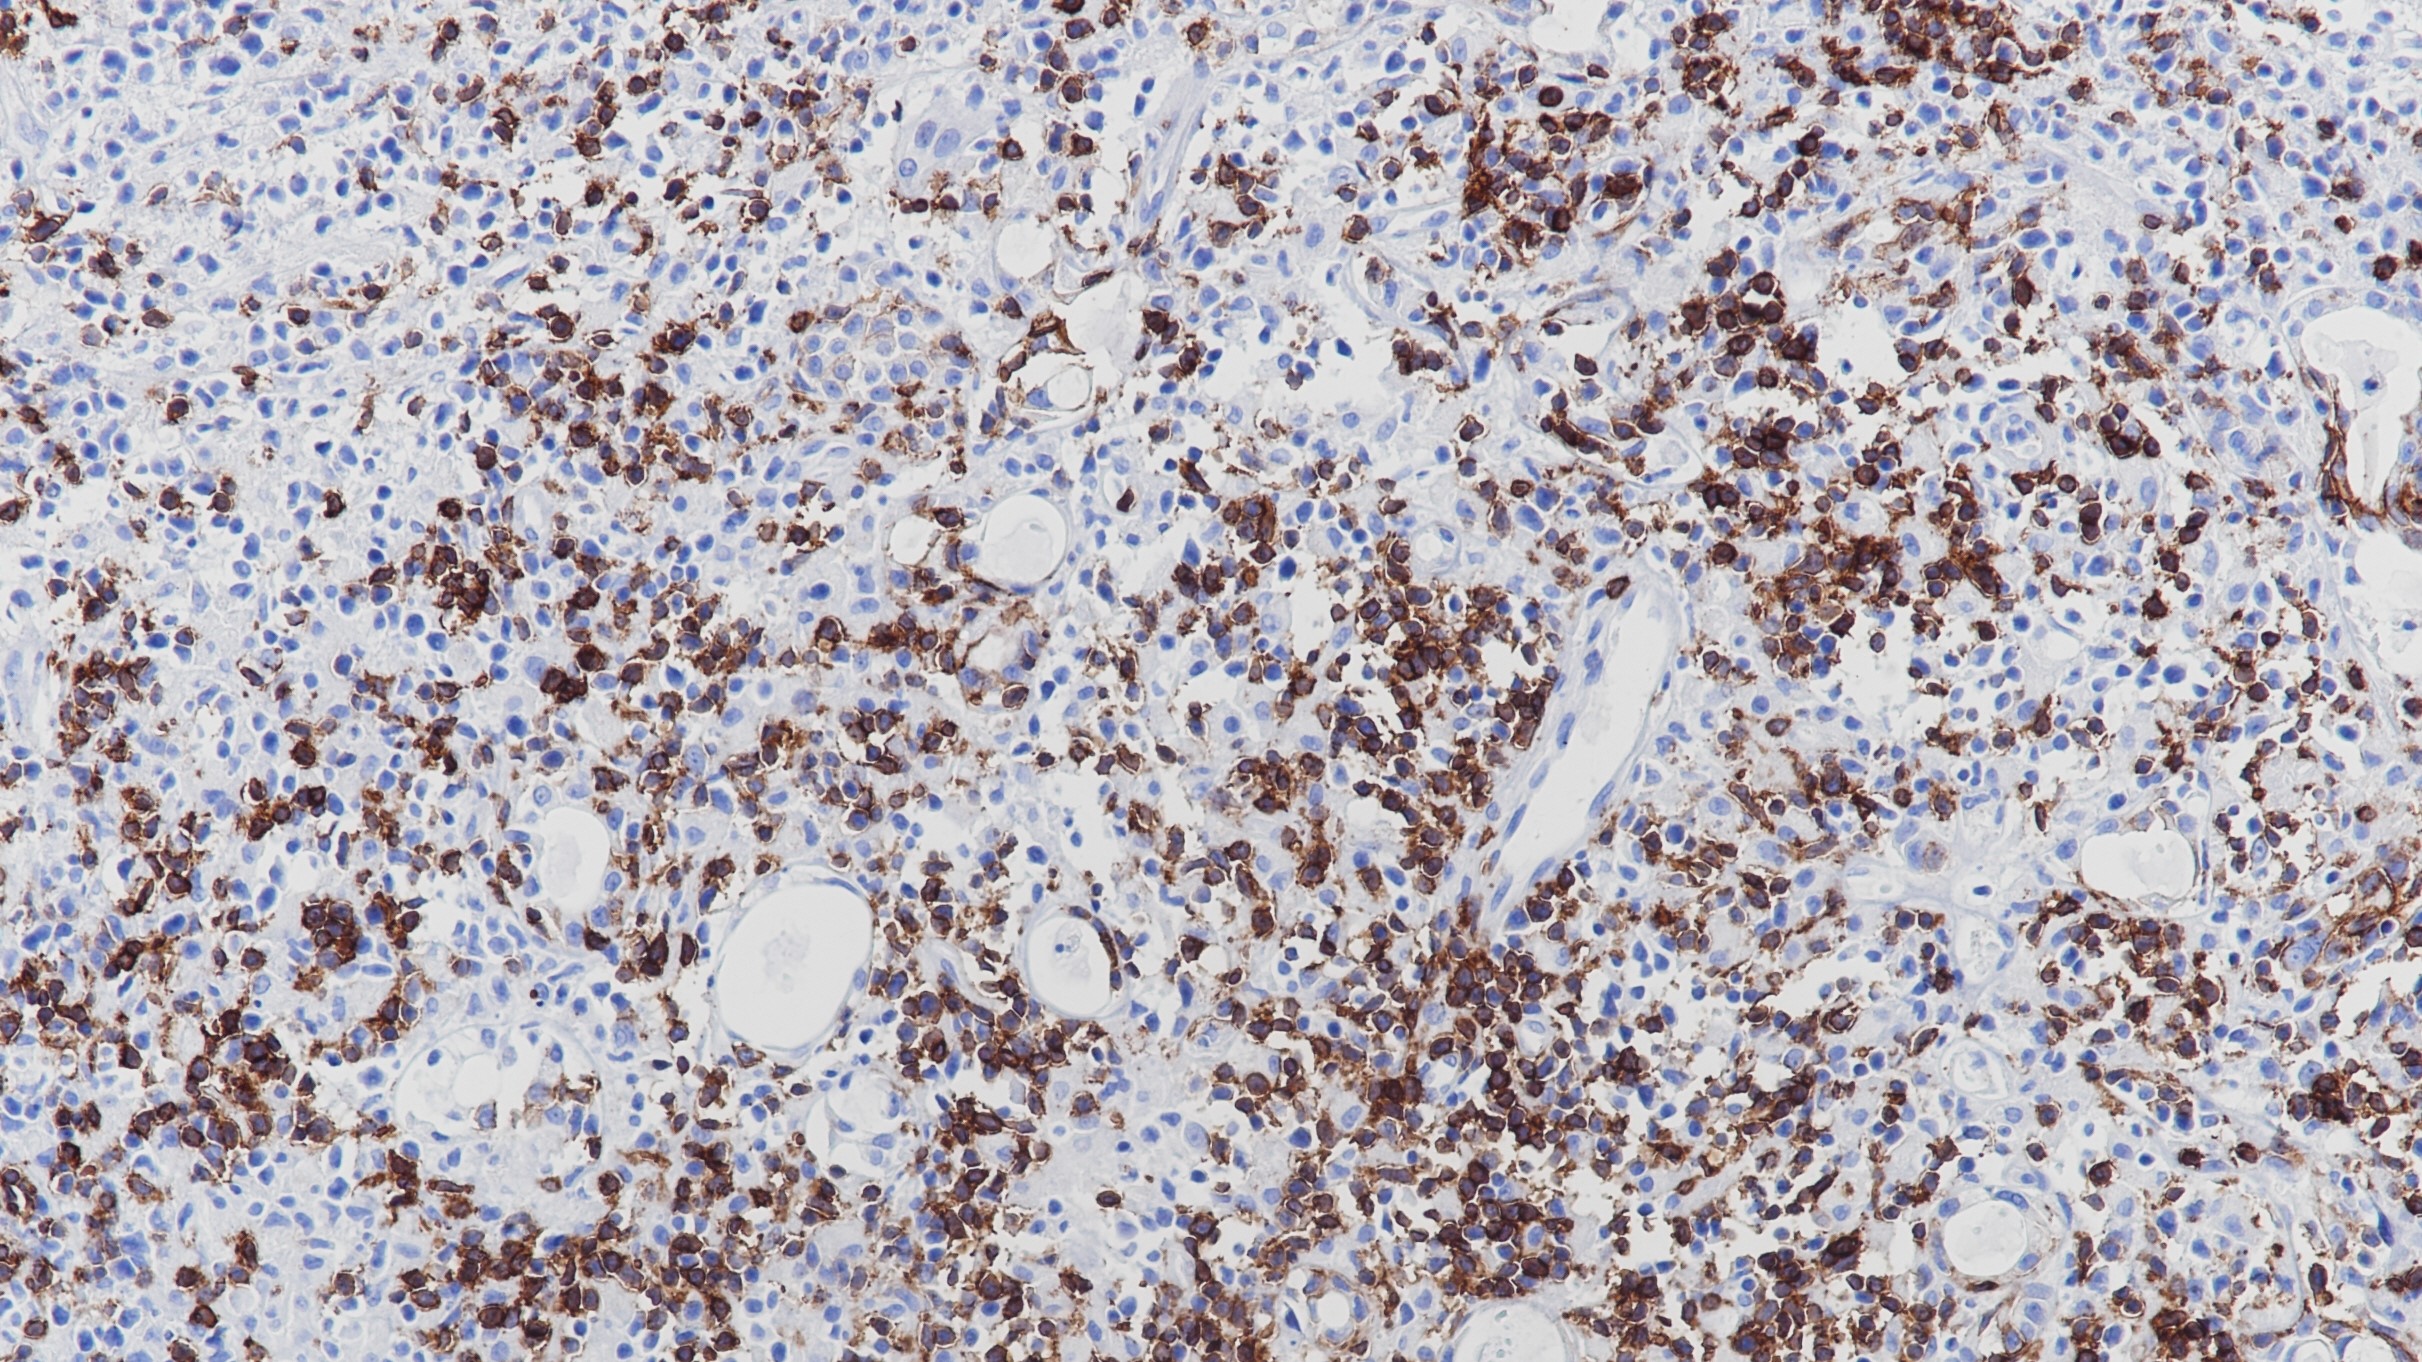 B细胞淋巴瘤CD5(BP6090)染色